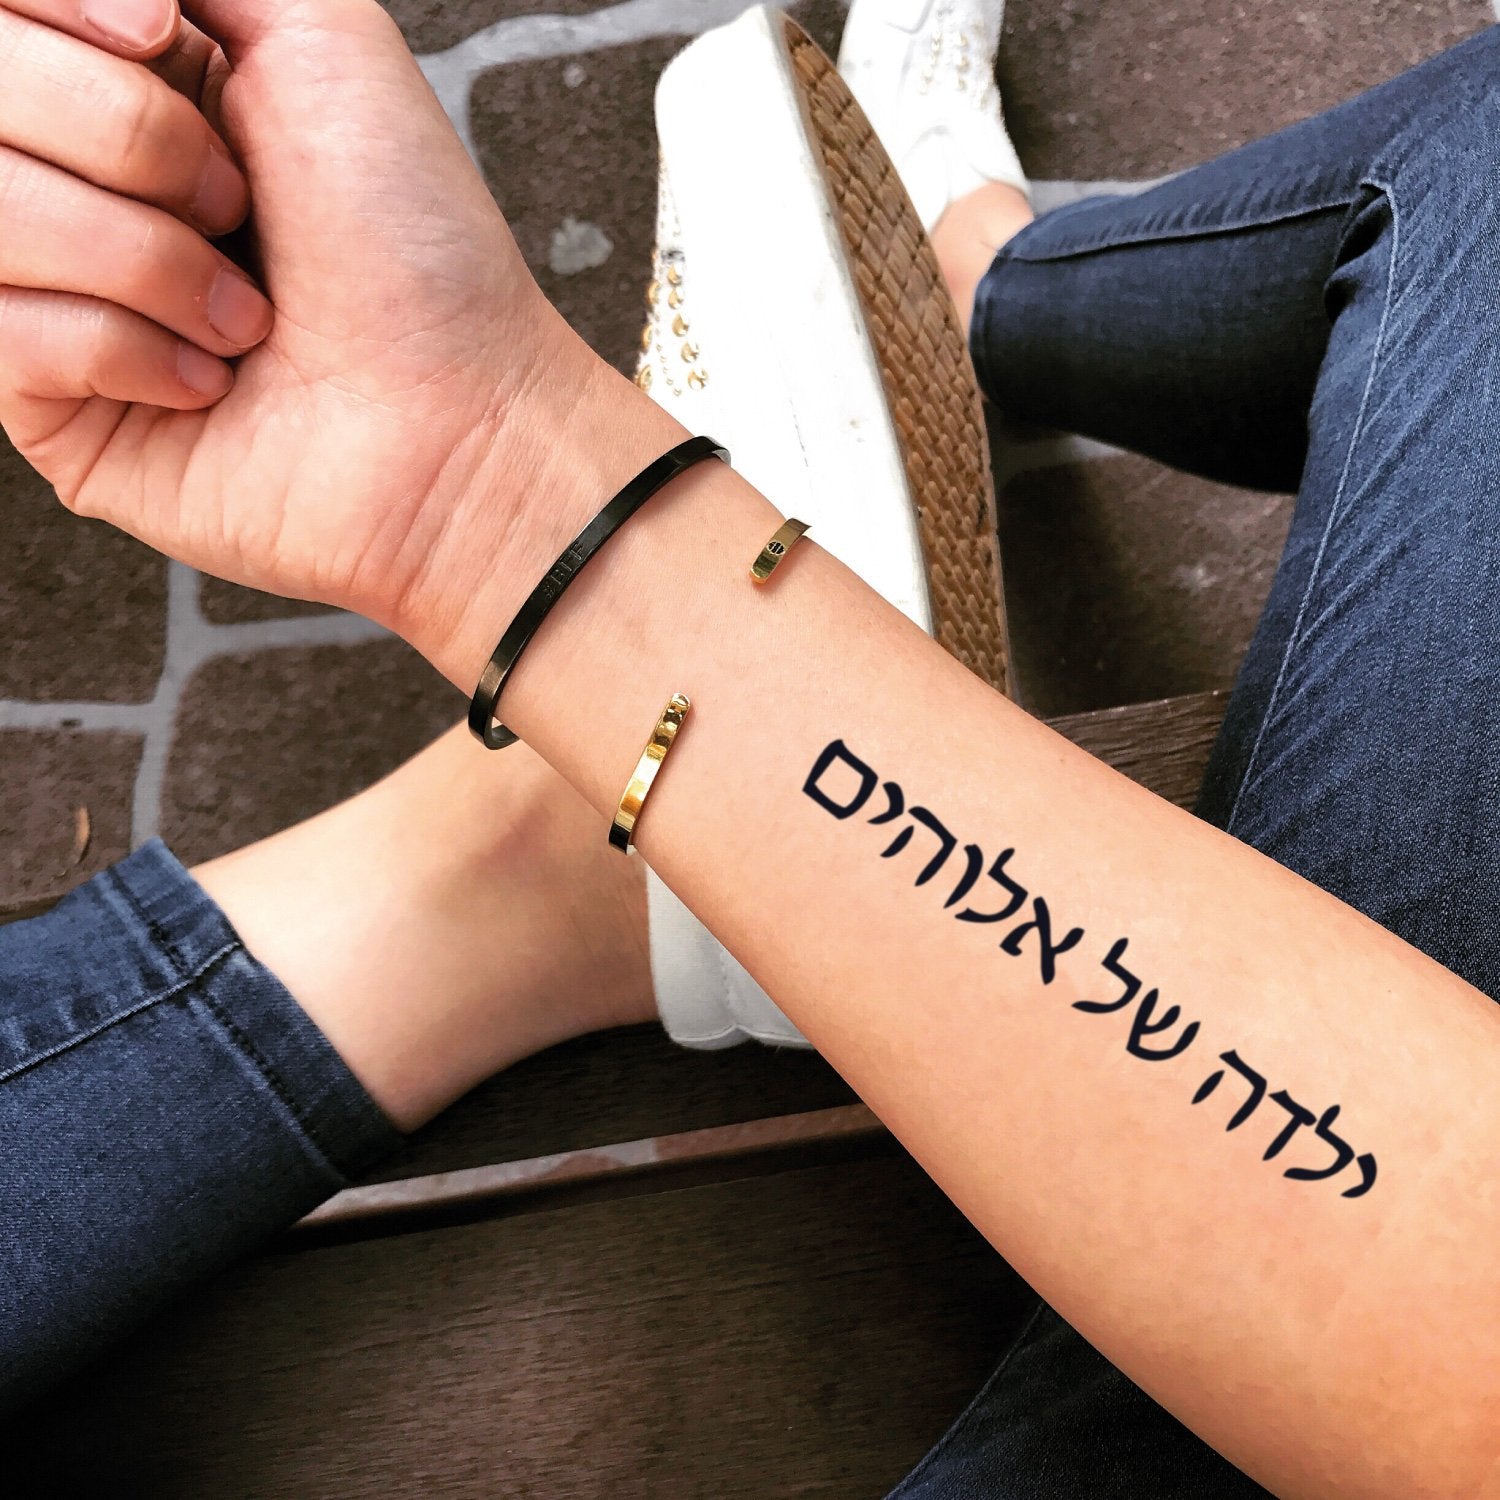 fake medium child of god elohim hebrew lettering temporary tattoo sticker design idea on forearm